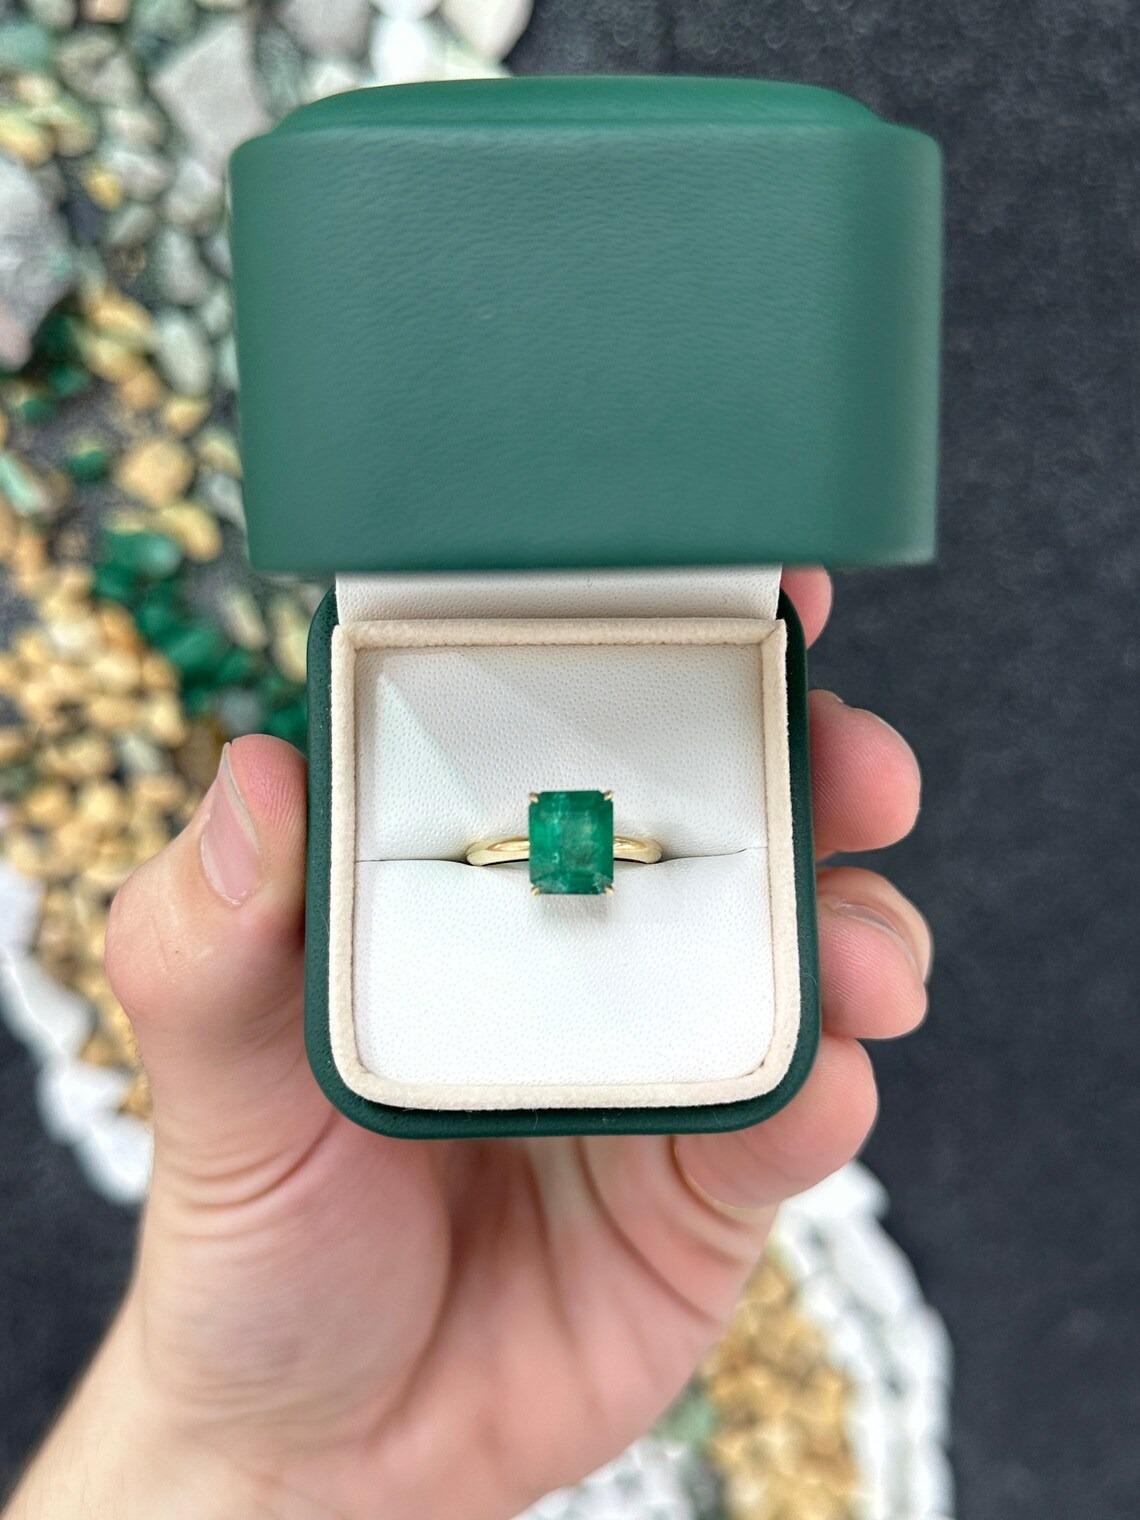 4 carat emerald ring